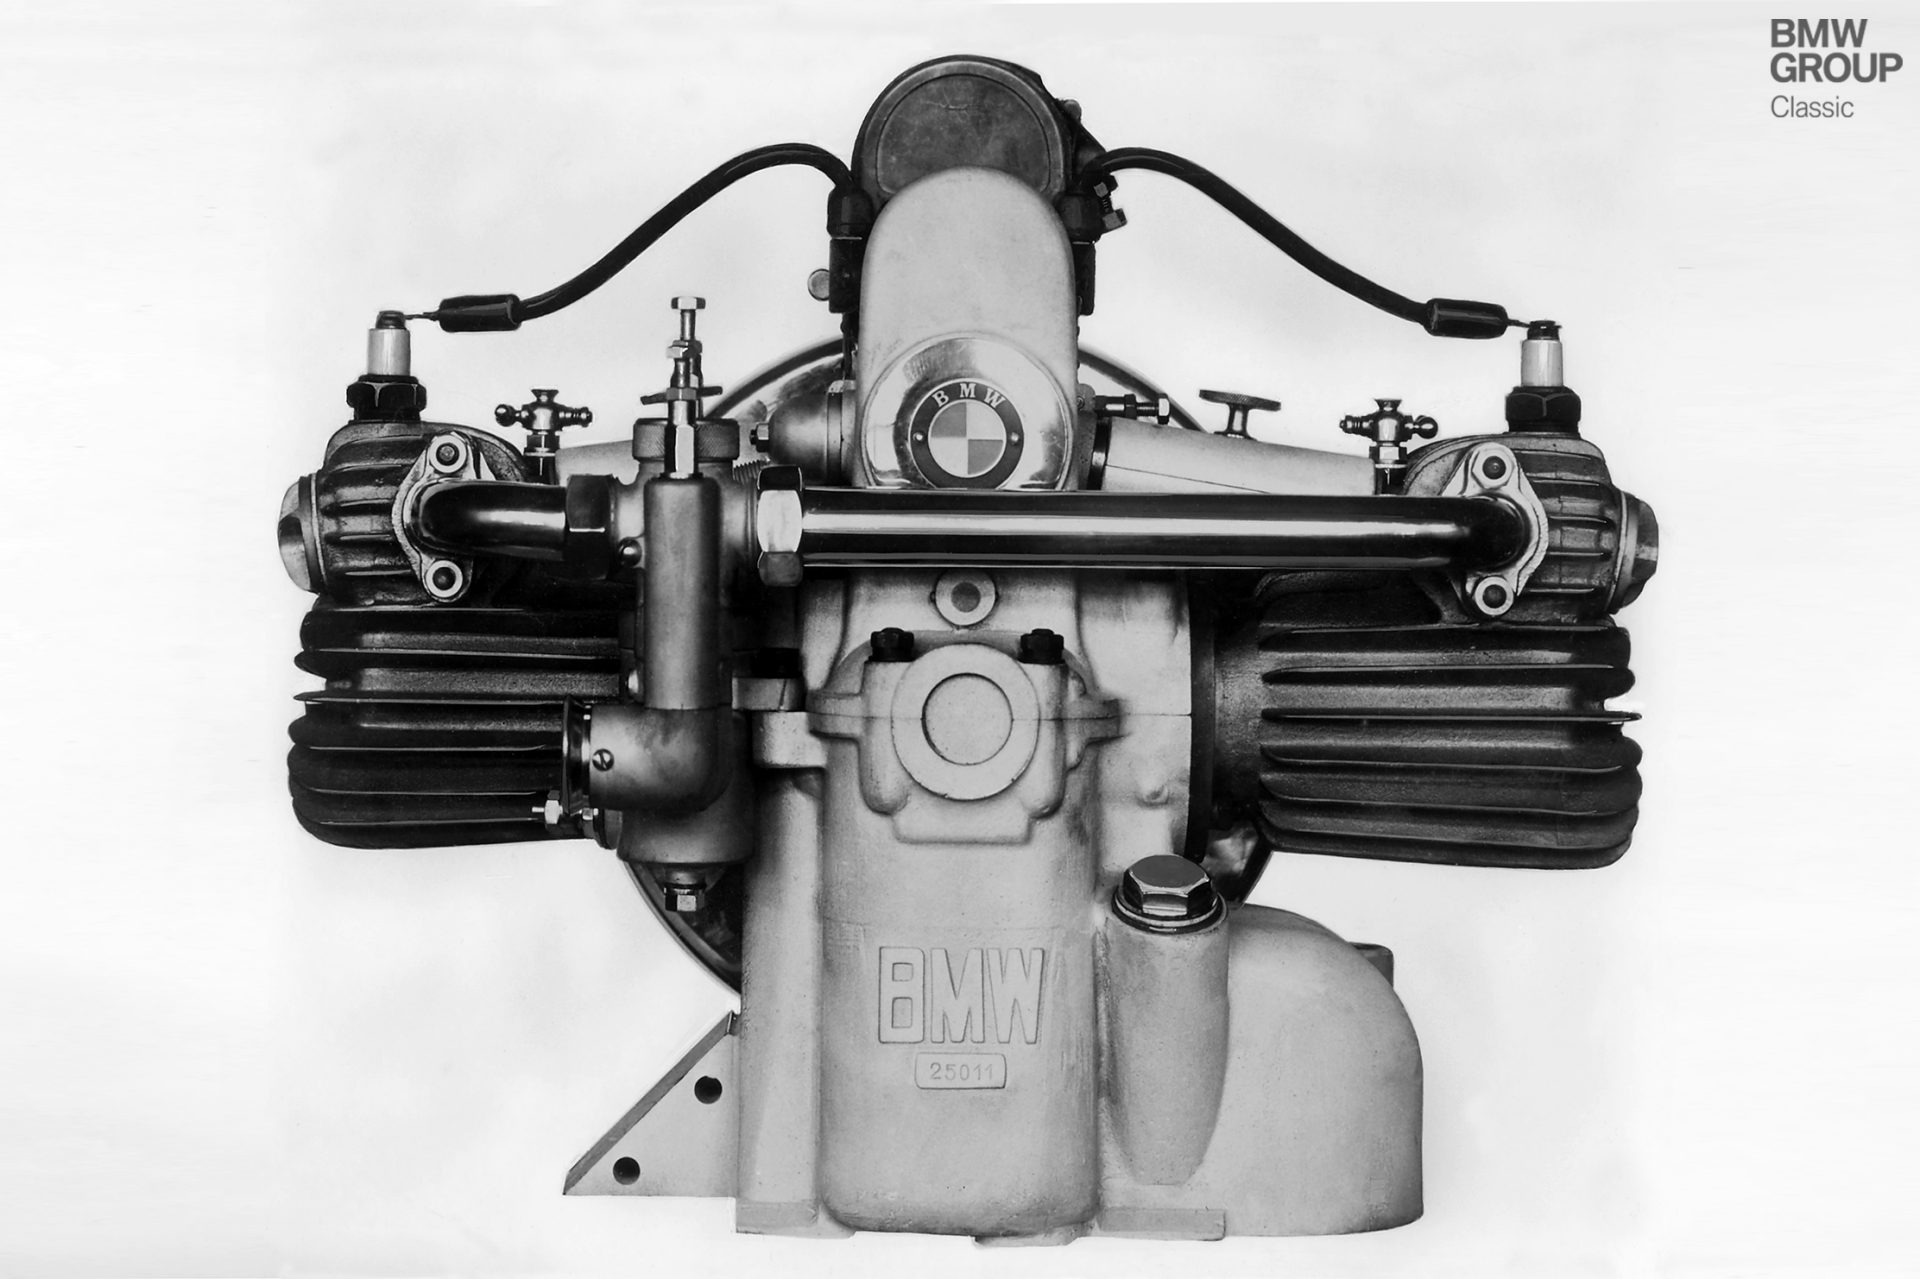 Boxer engine